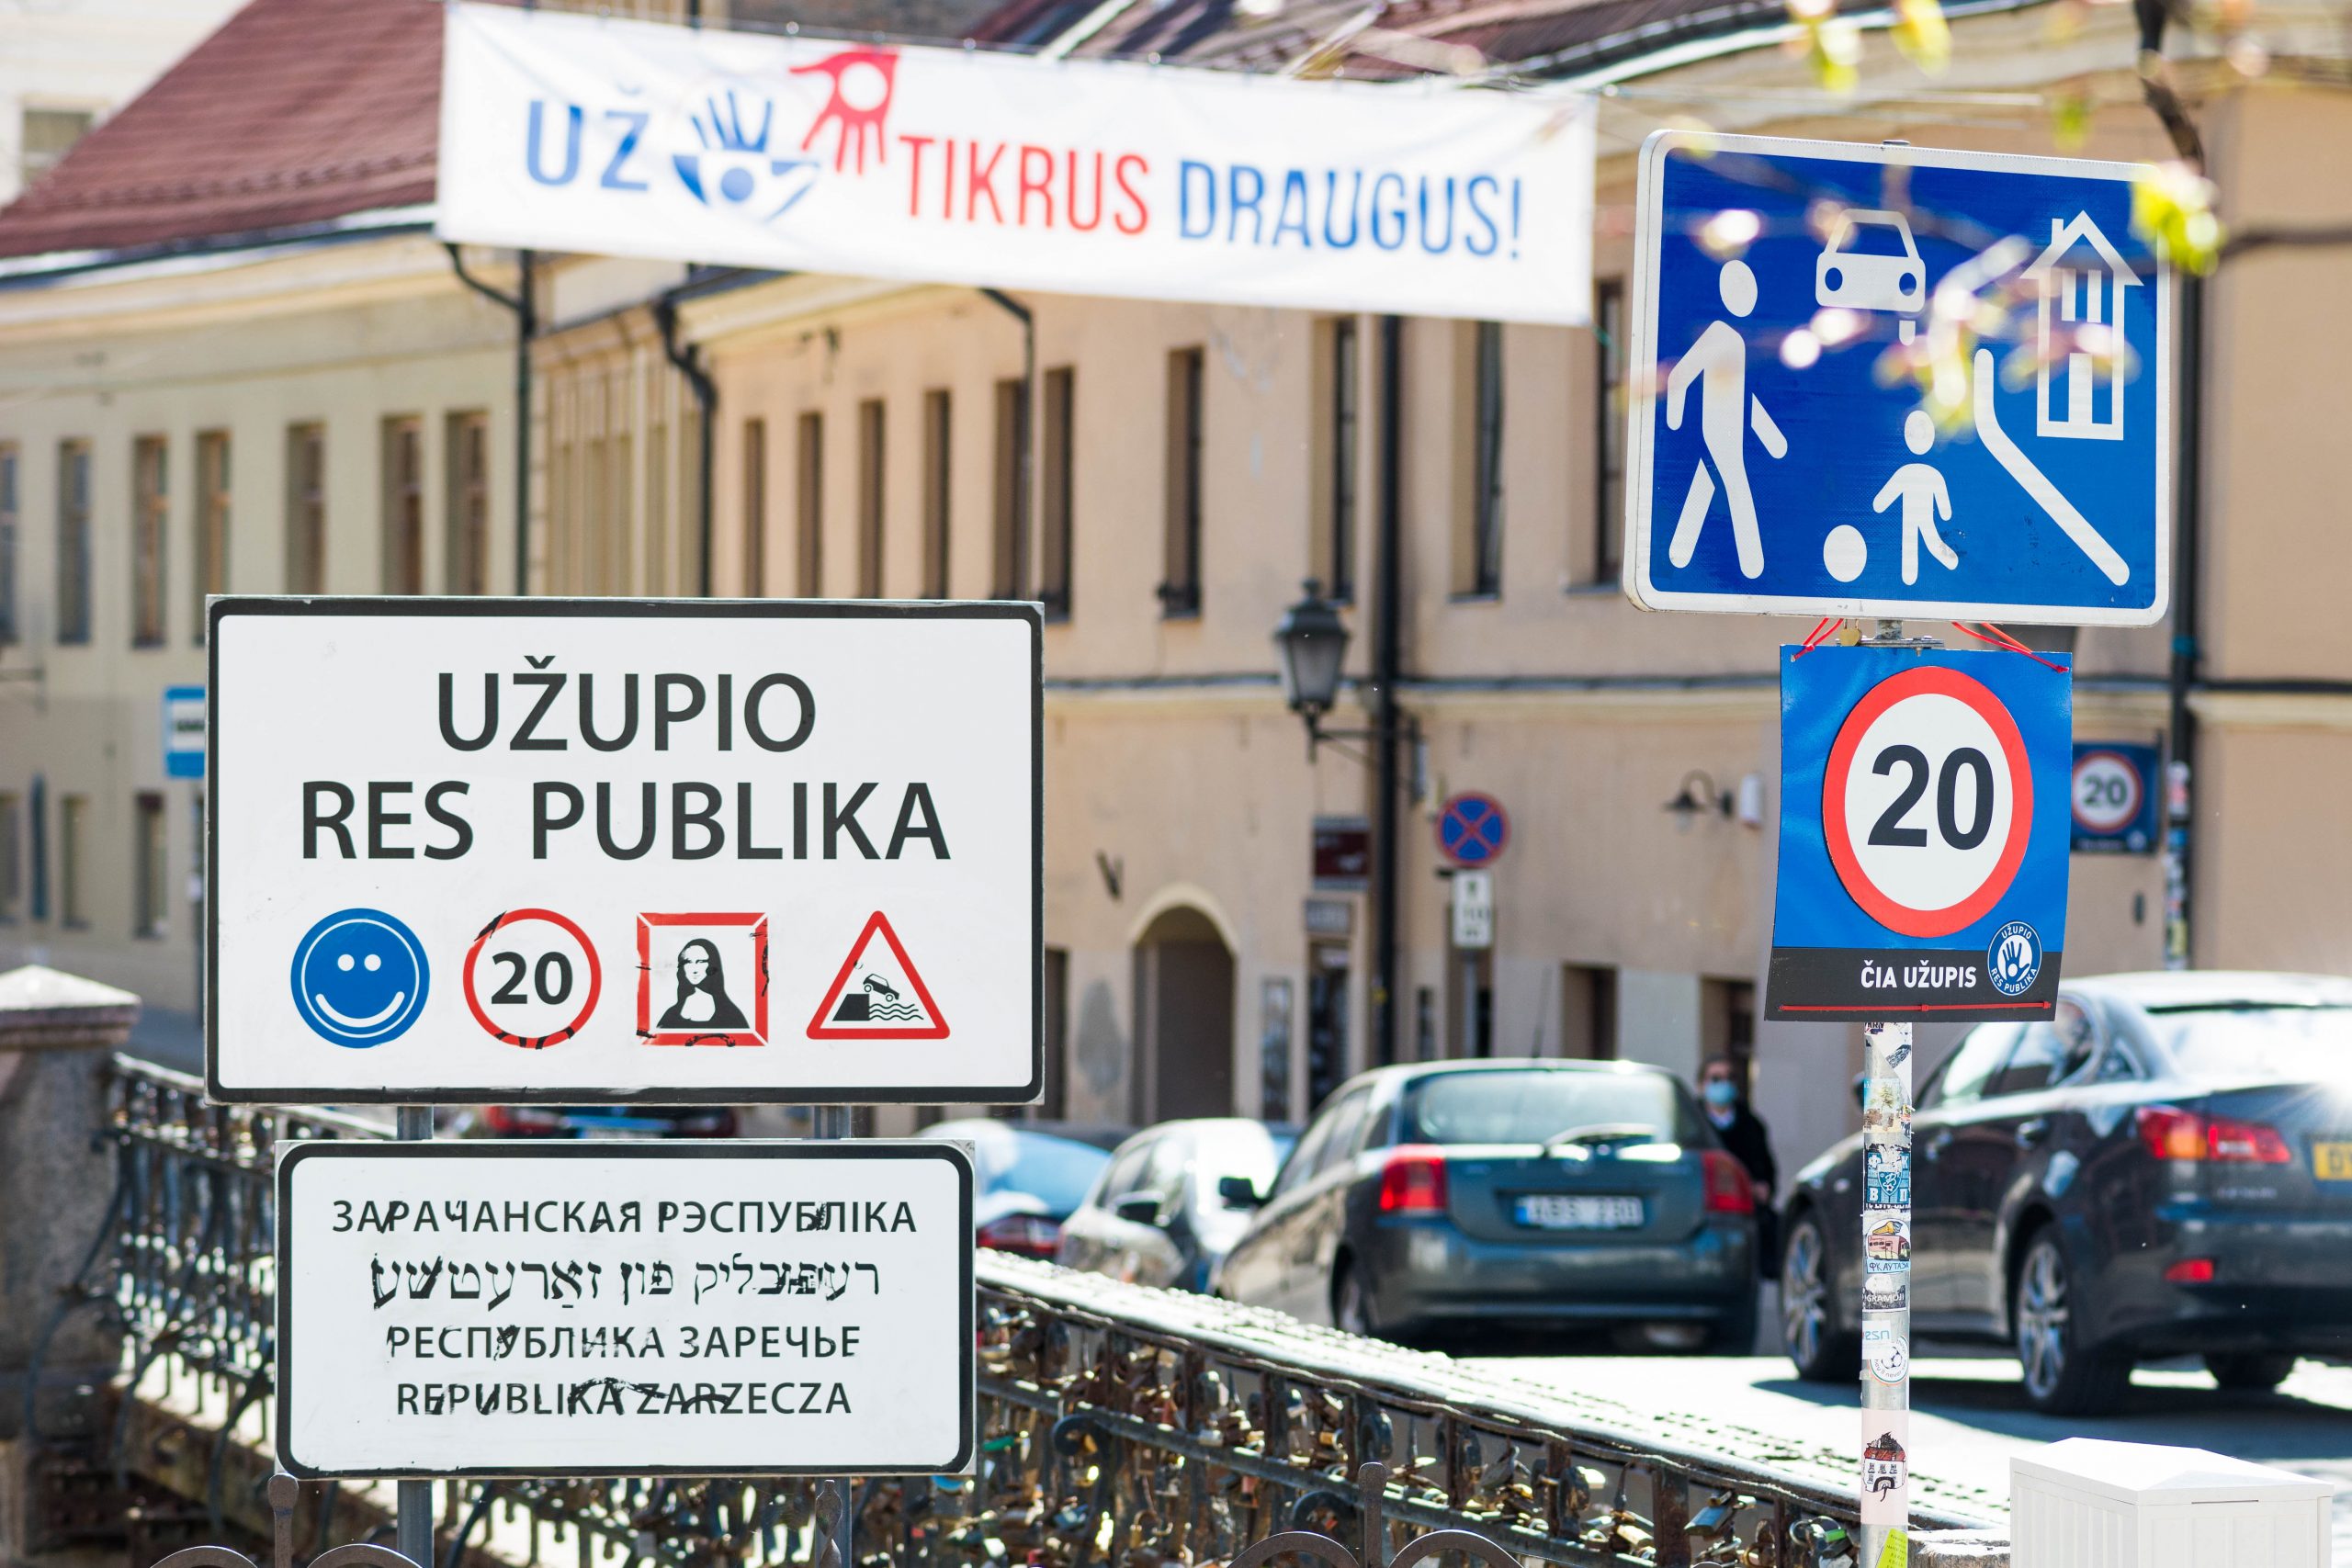 Užupis Sign in Vilnius Lithuania (Shutterstock)